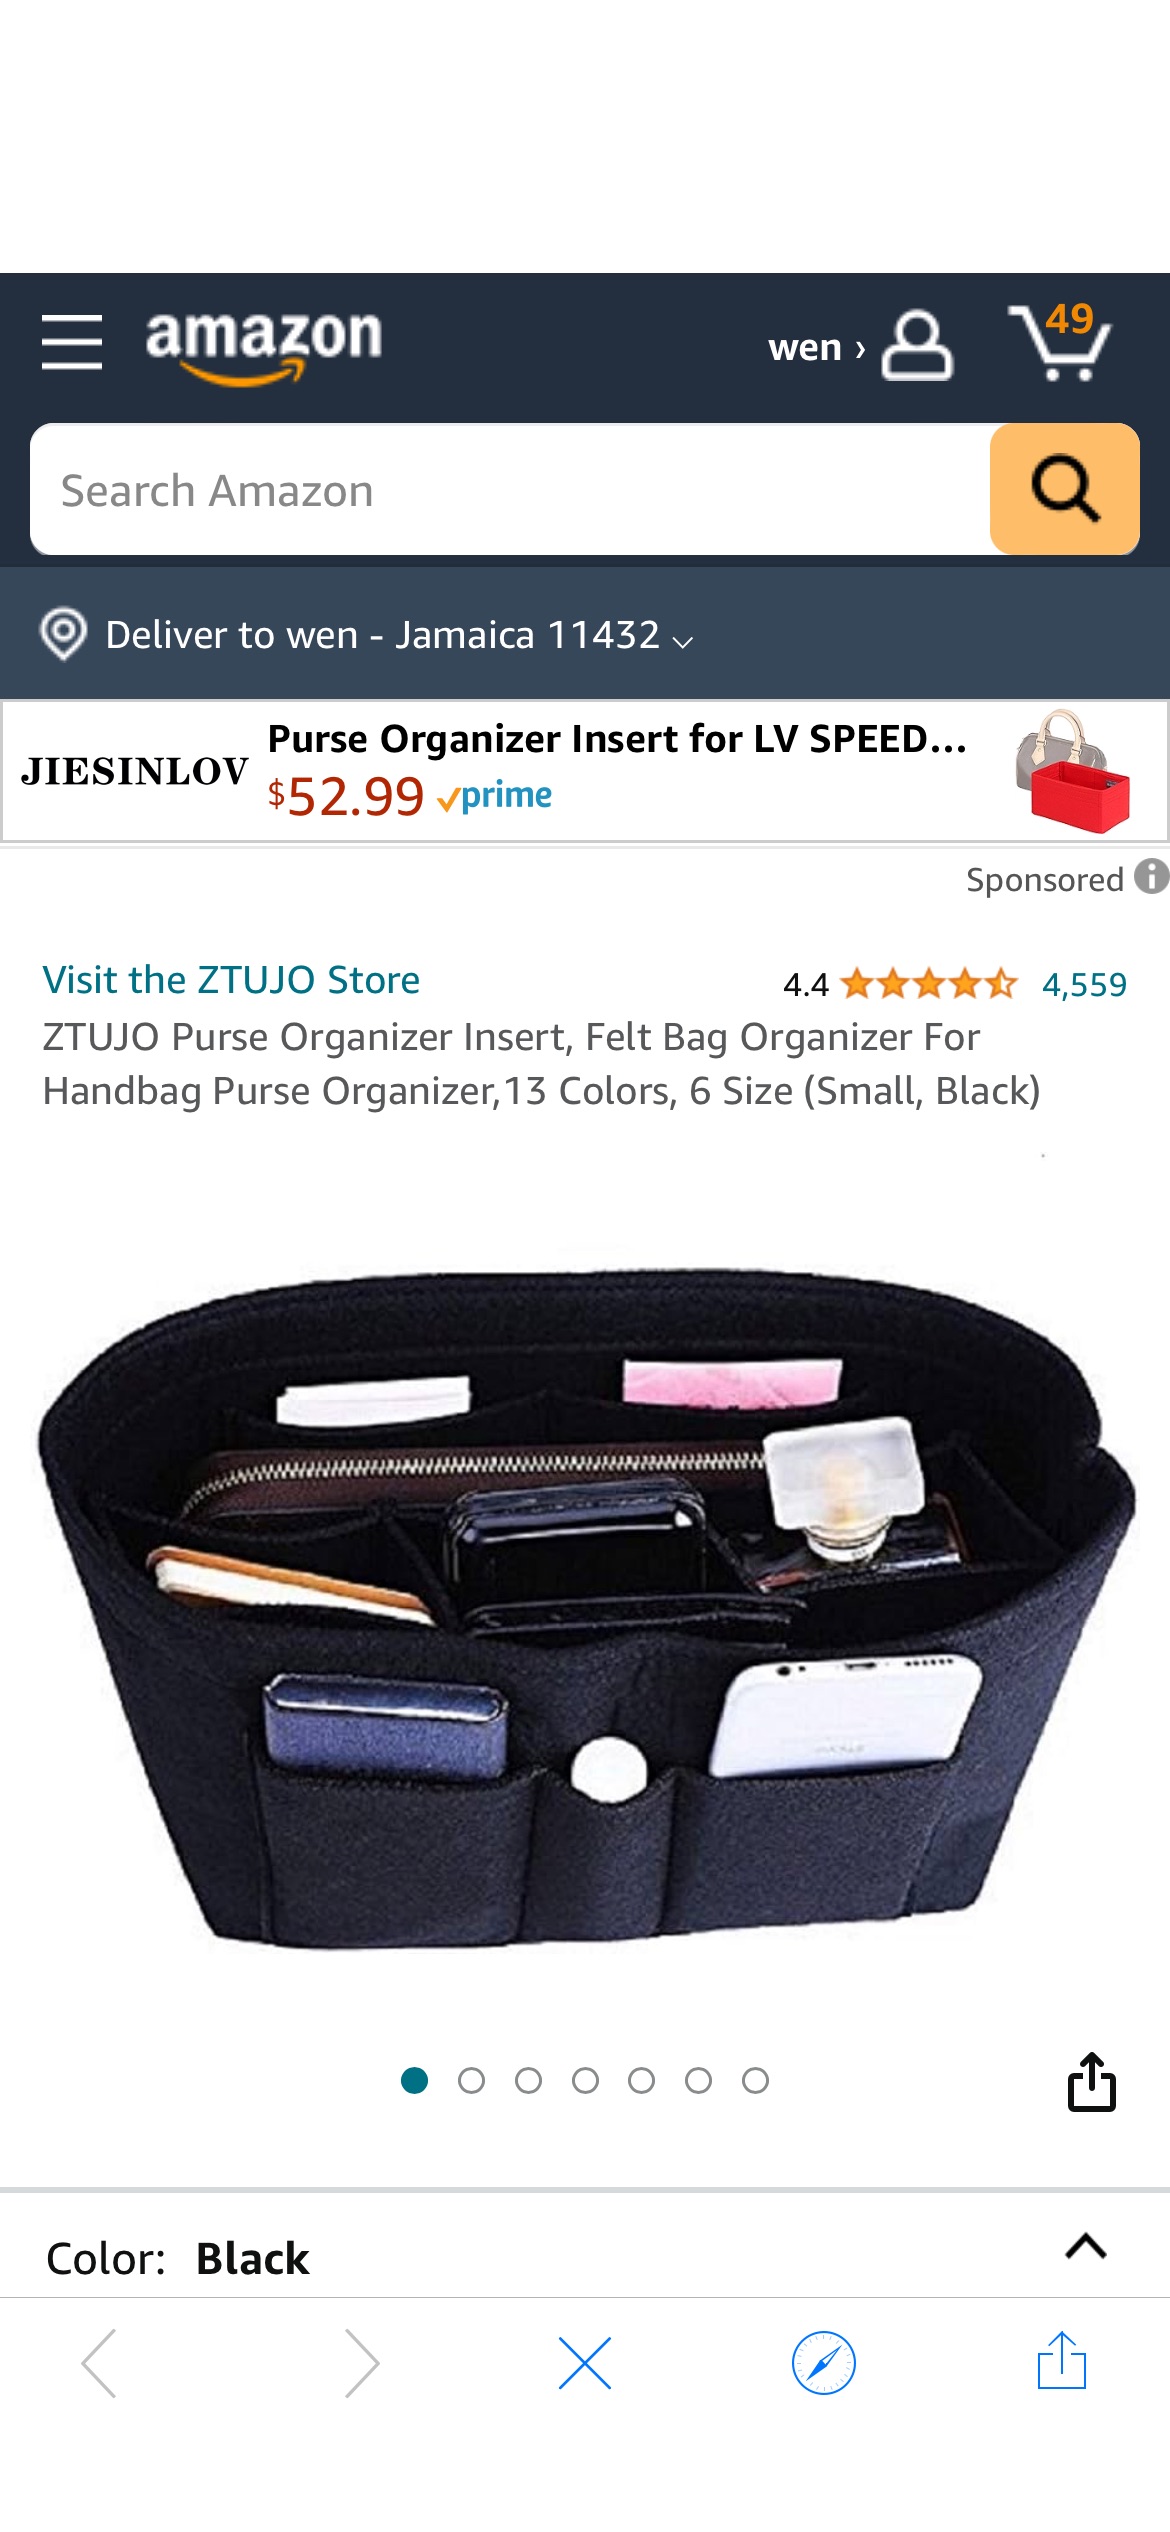 Amazon.com: ZTUJO Purse Organizer Insert, Felt Bag Organizer For Handbag Purse Organizer,13 Colors, 6 Size (Small, Black) : Clothing, Shoes & Jewelry